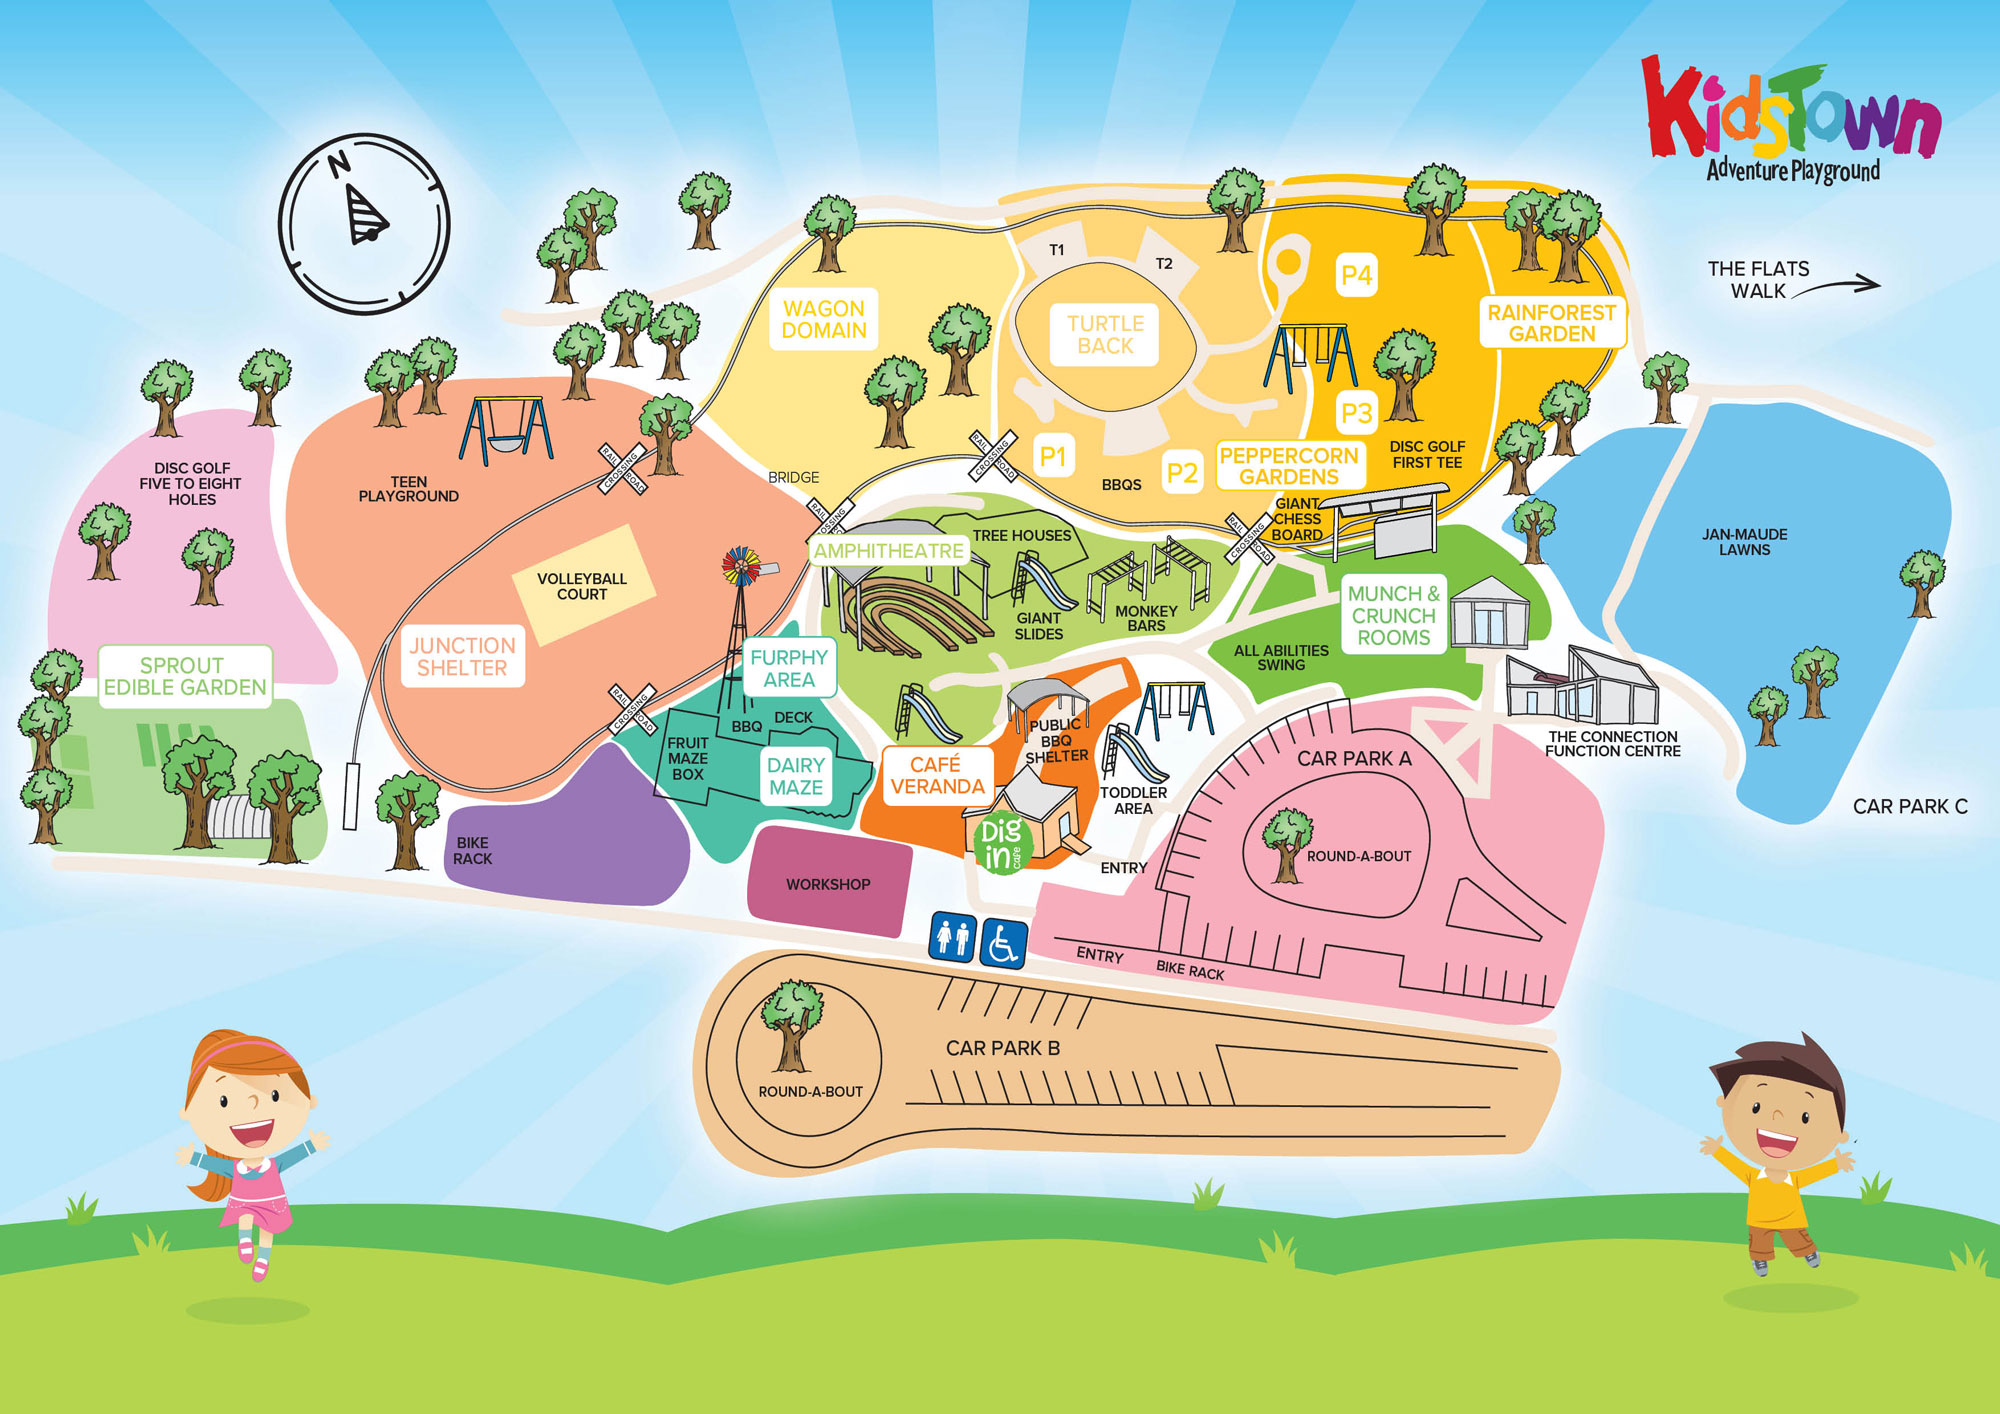 KidsTown Playground Map